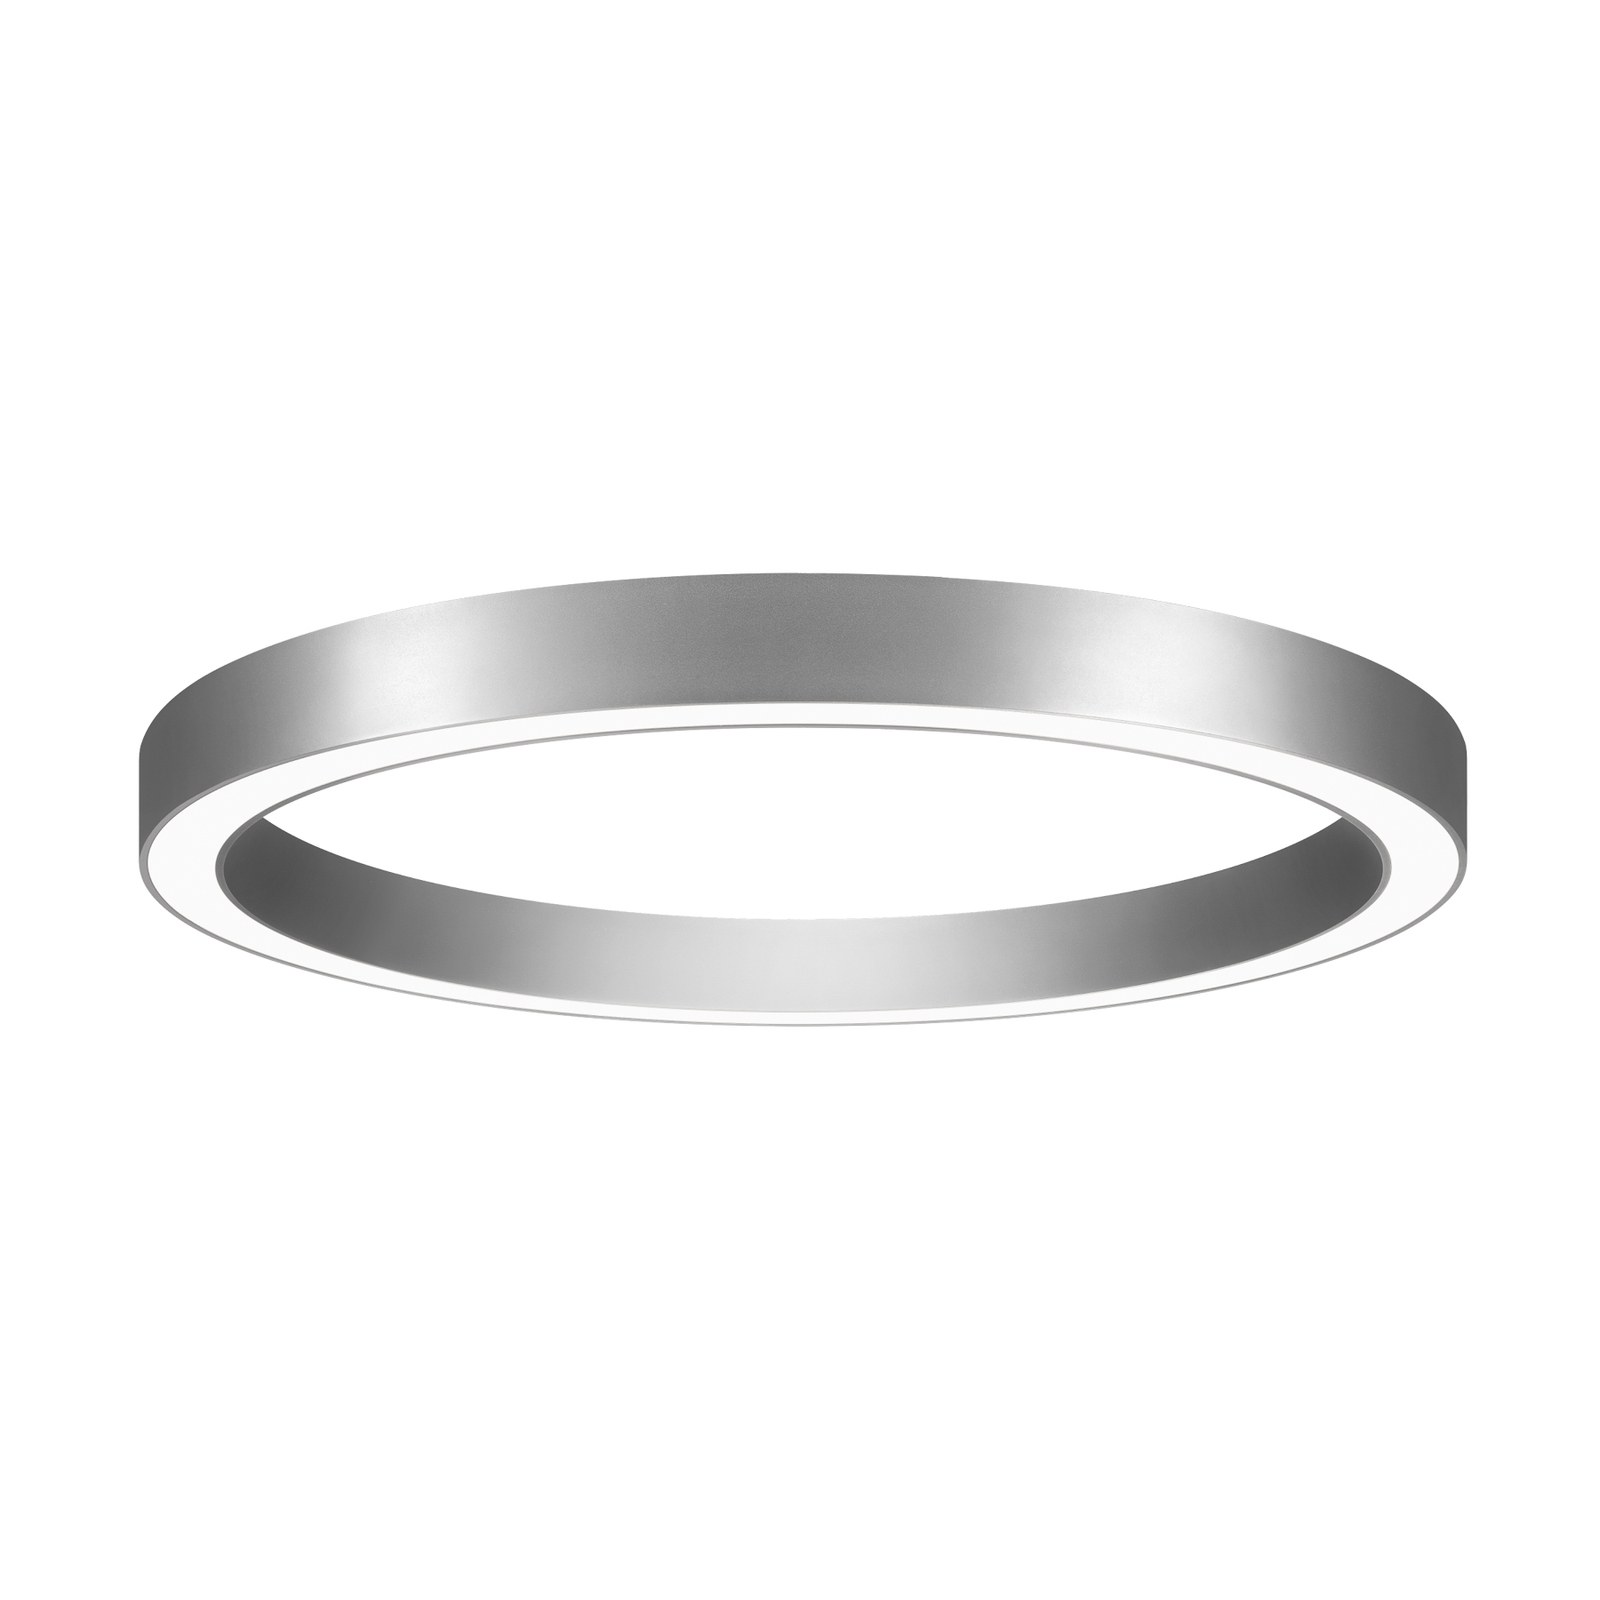 BRUMBERG Biro Circle Ring, Ø 60 cm, Casambi, silver, 840